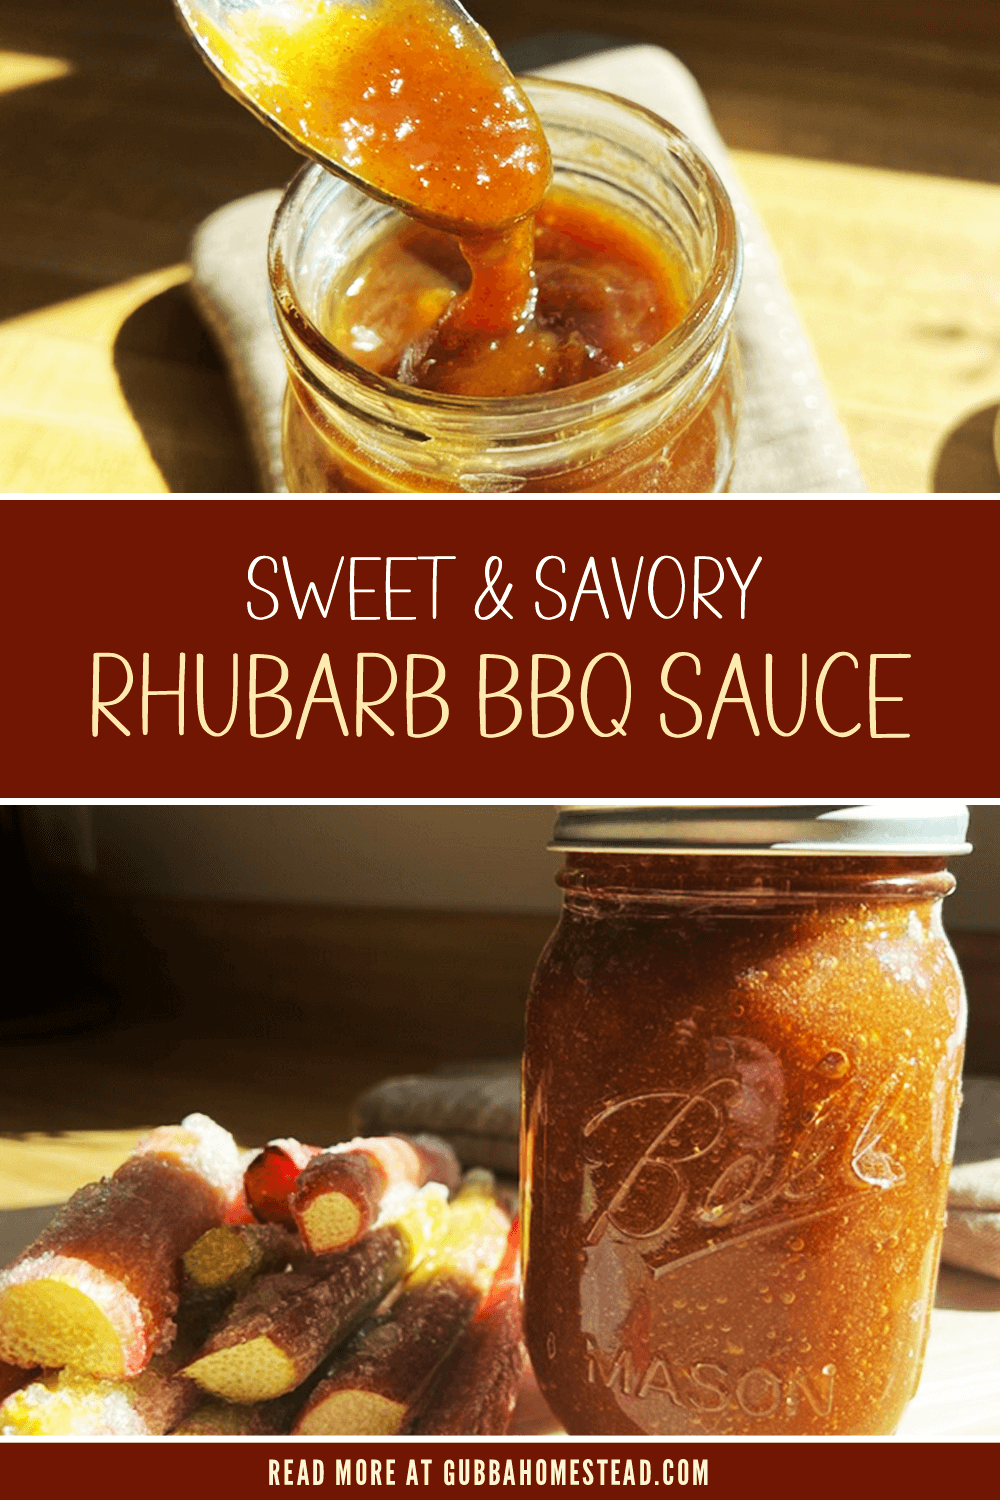 Sweet & Savory Rhubarb BBQ Sauce